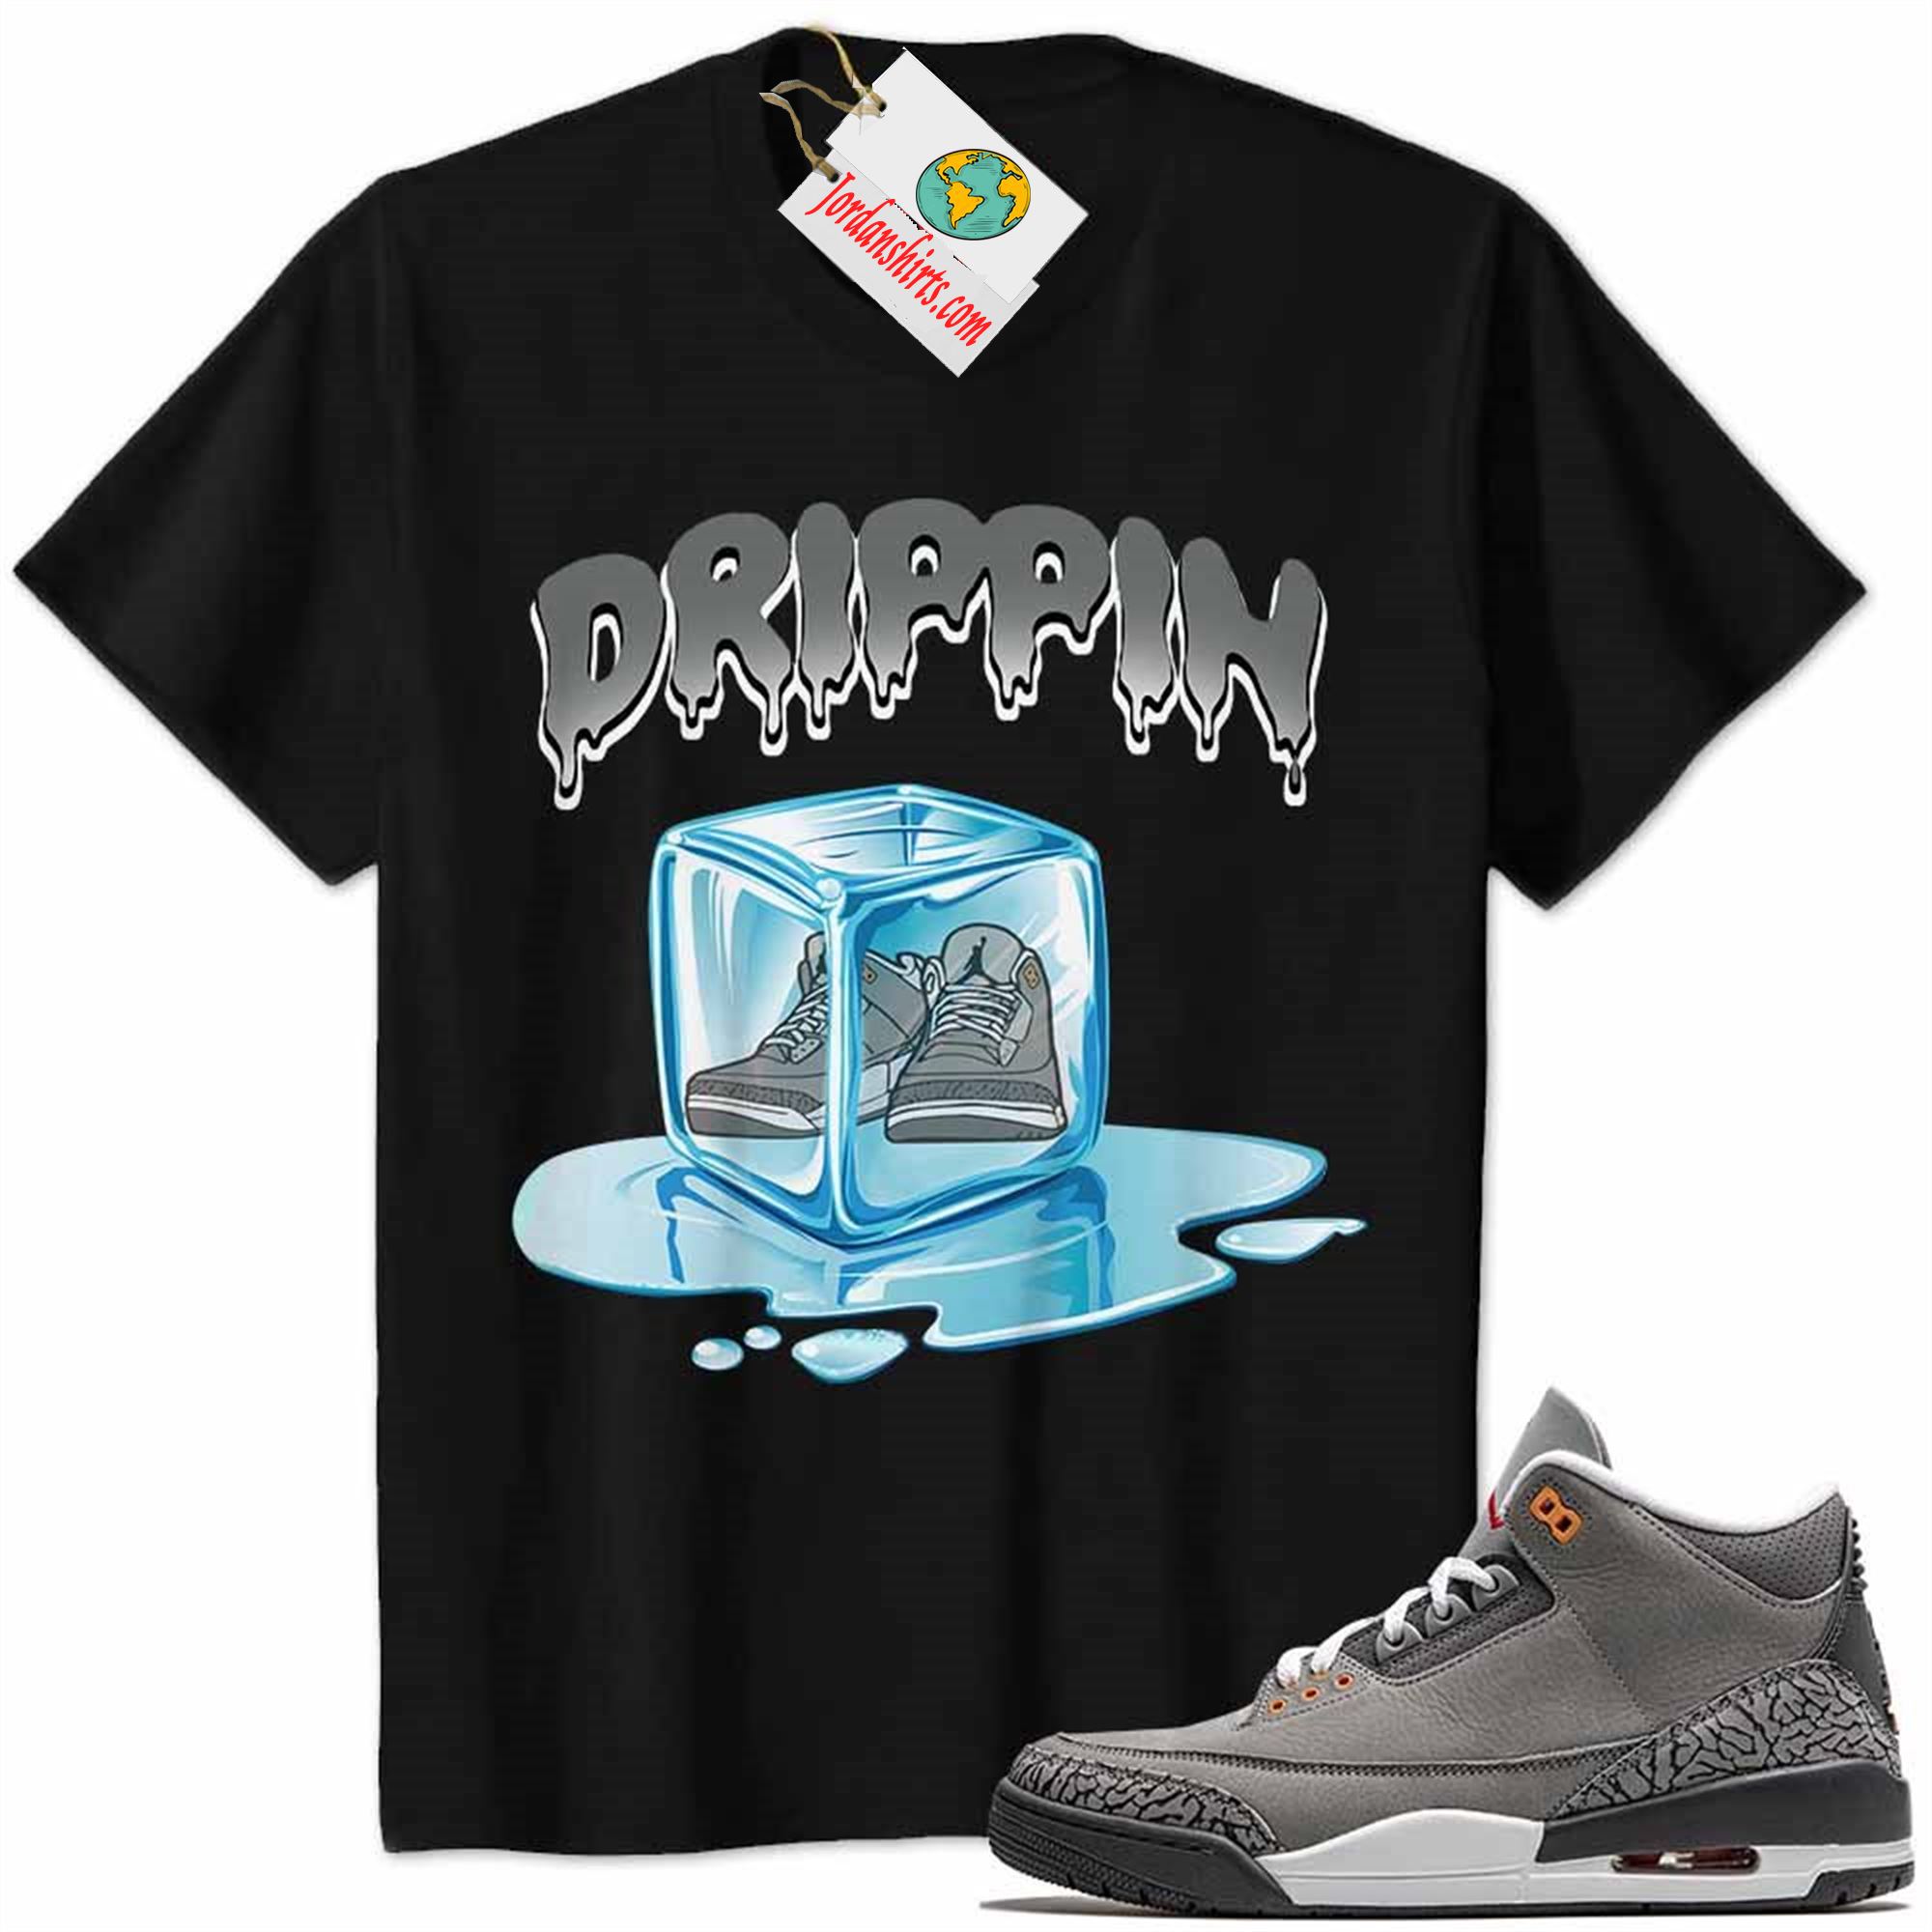 Jordan 3 Shirt, Jordan 3 Cool Grey Shirt Ice Cube Melting Black Size Up To 5xl